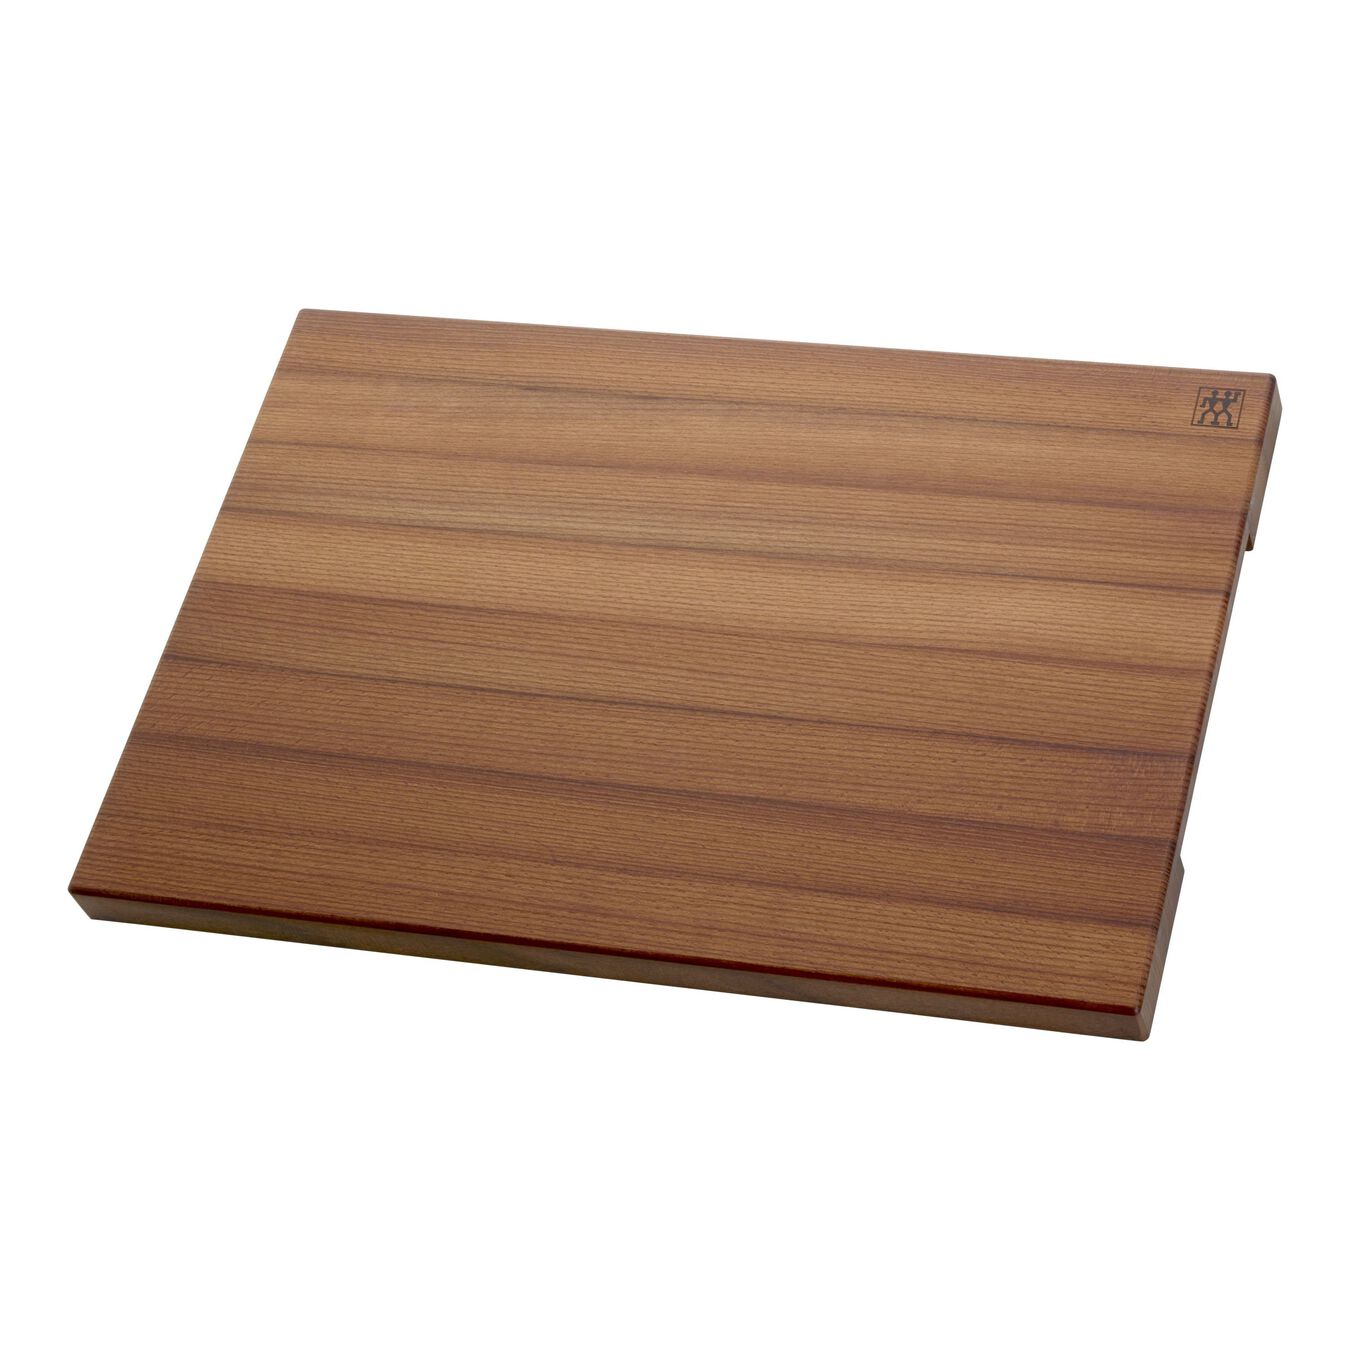 Cutting board 60 cm x 40 cm beech,,large 1